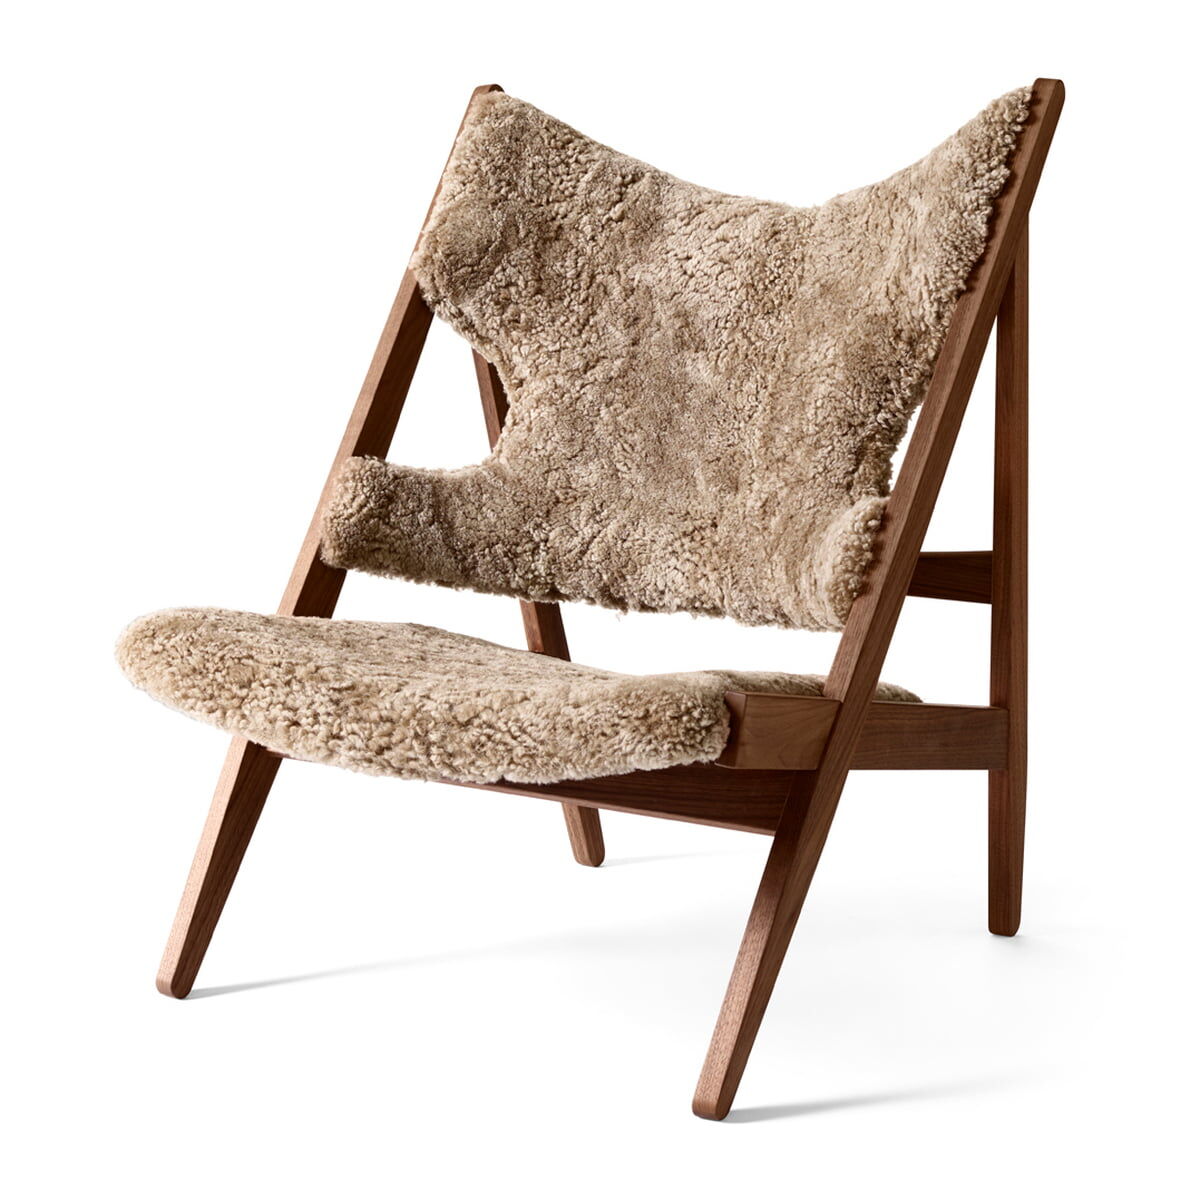 MENU - Knitting Chair, Walnuss / Sheepskin Cork 19